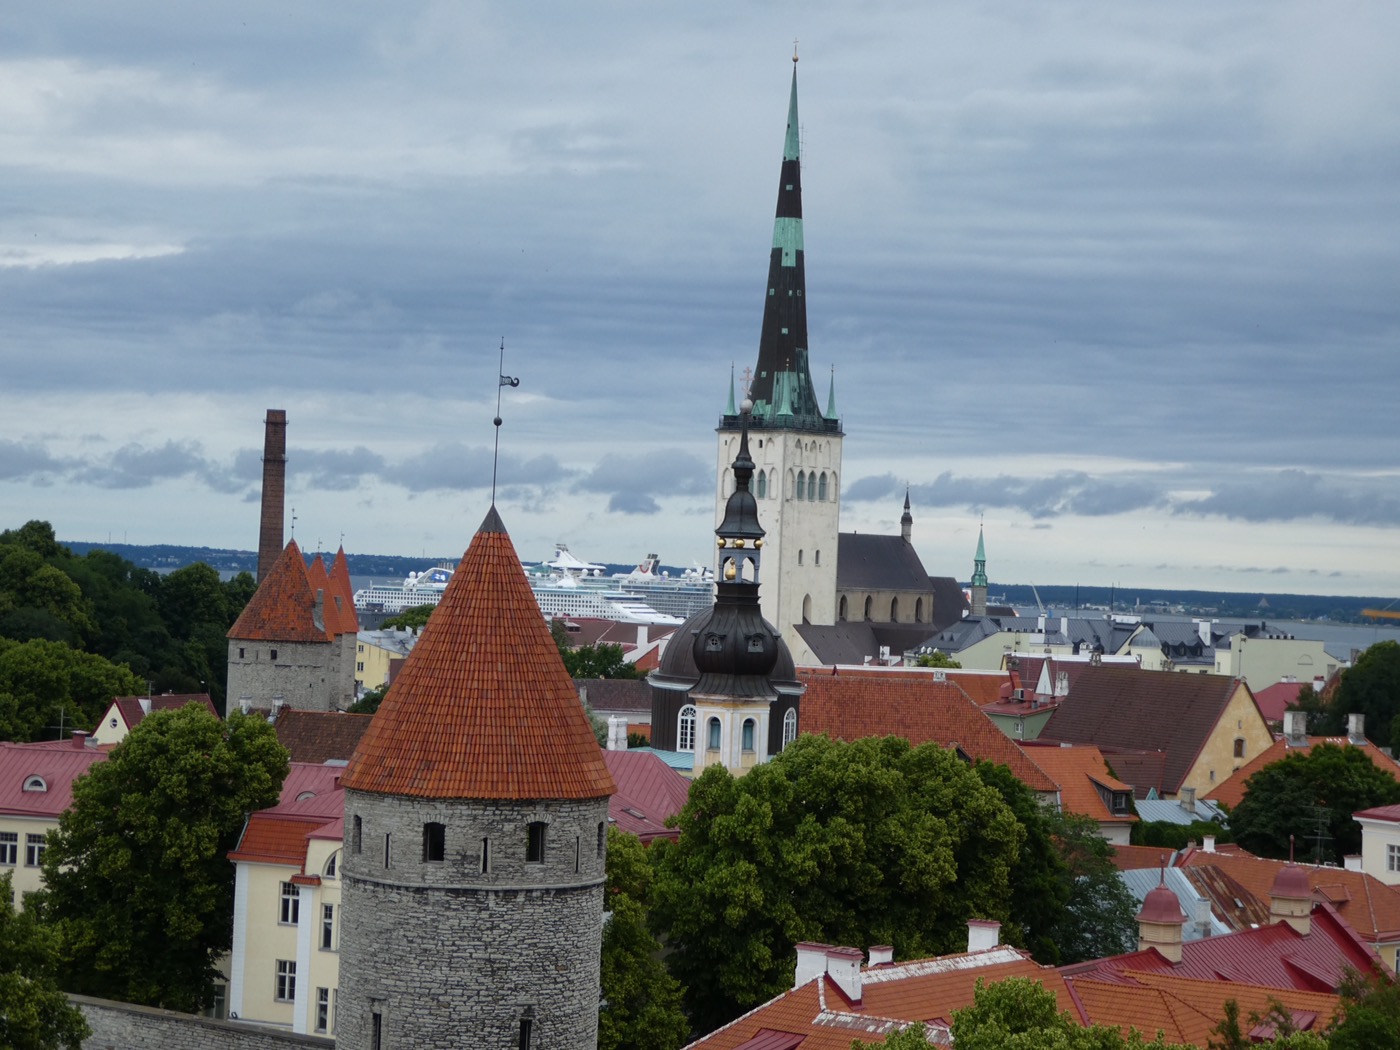 The rooftops of Tallinn